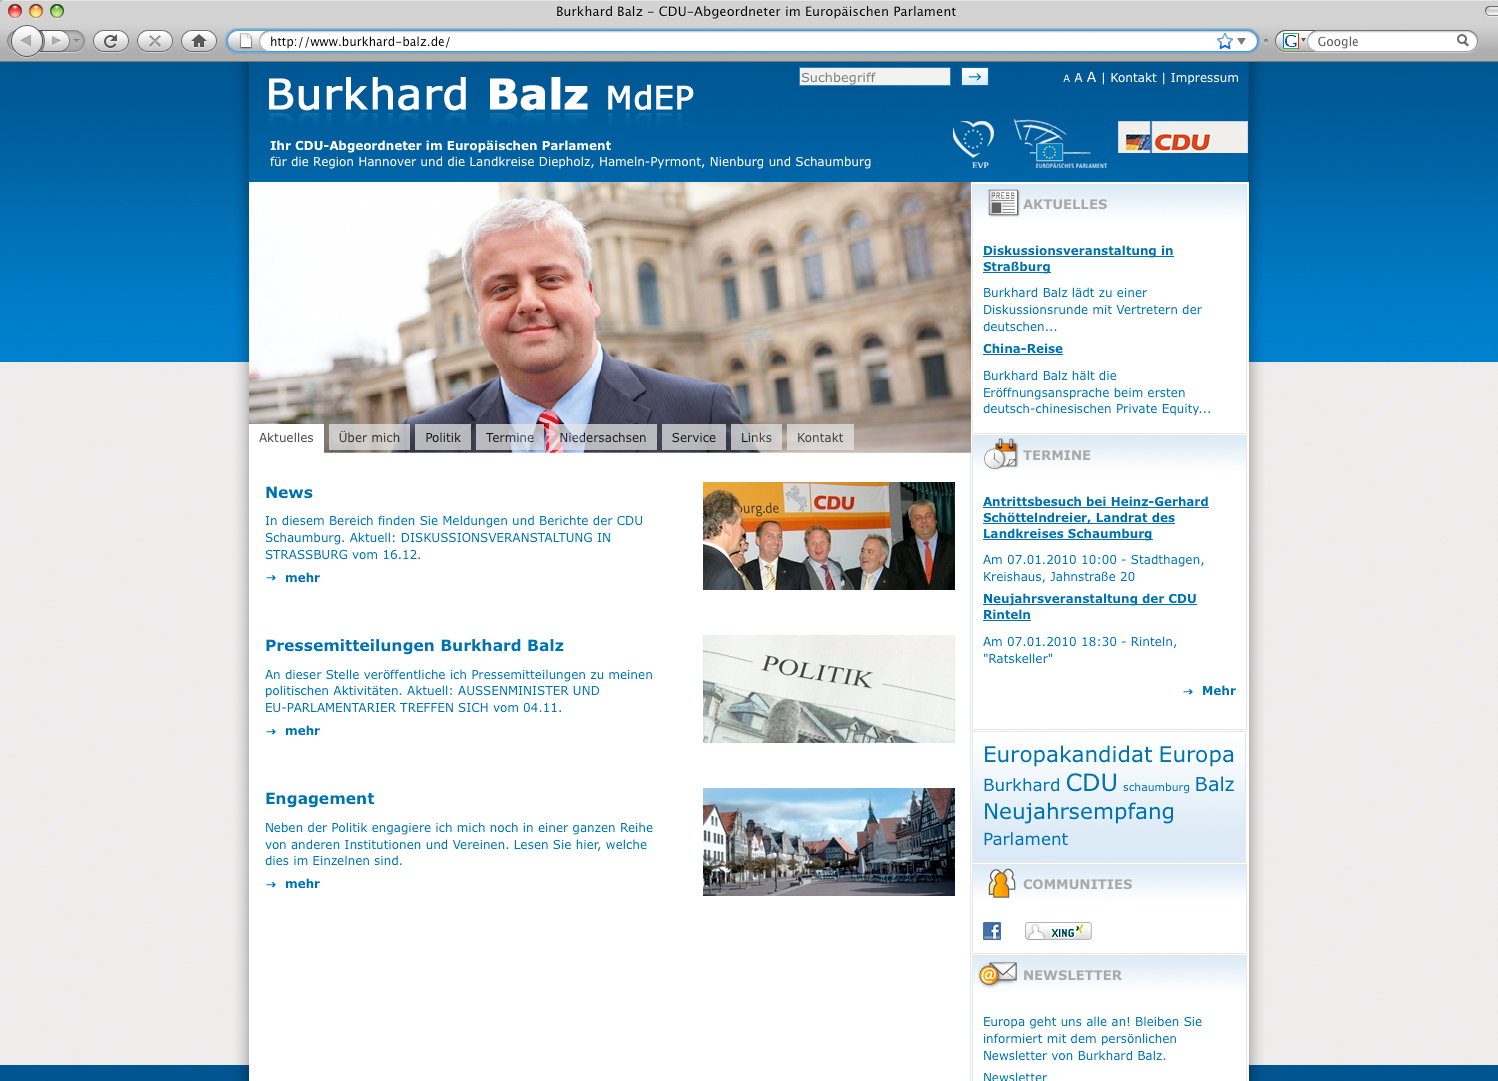 Burkhard Balz - Official Site of the EU Politician (Internet Marketing Services GmbH)